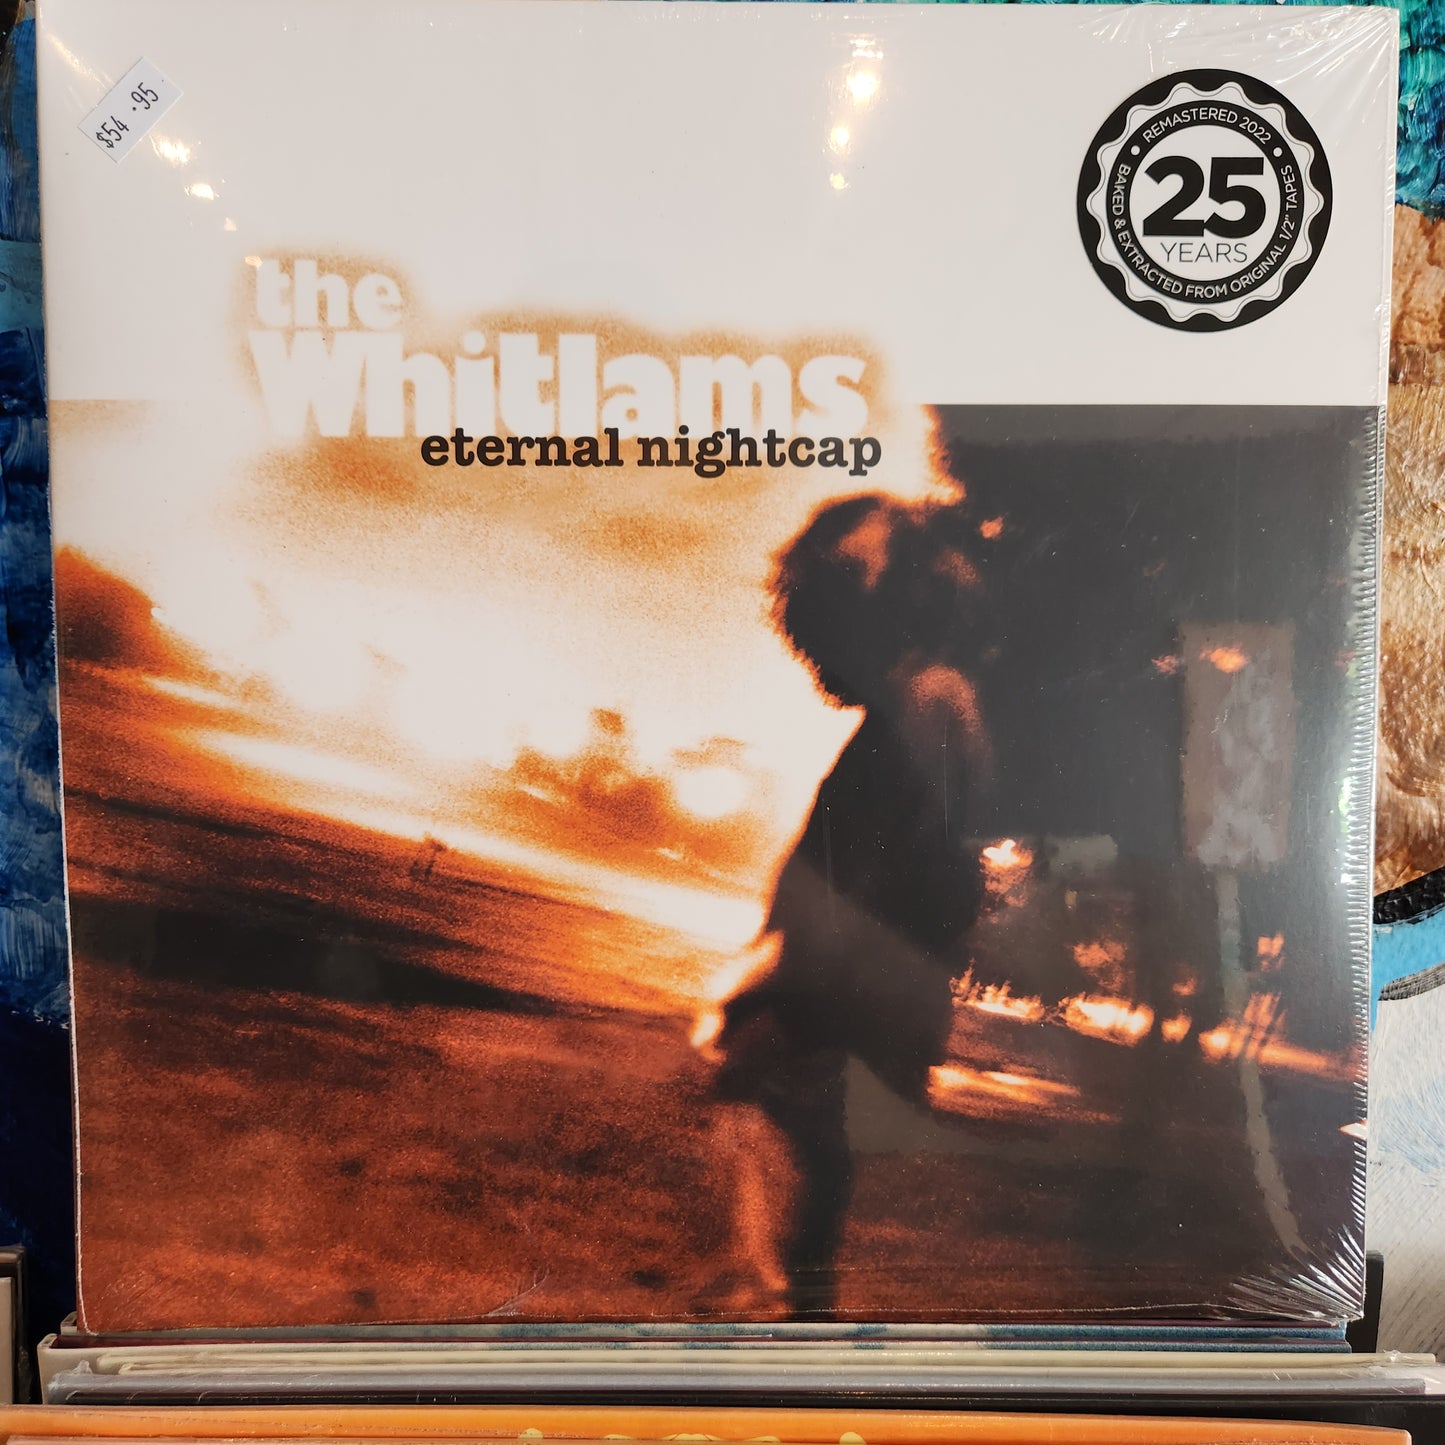 The Whitlams - Eternal Nightcap - 25th Anniversary Edition (Remastered) - Vinyl LP